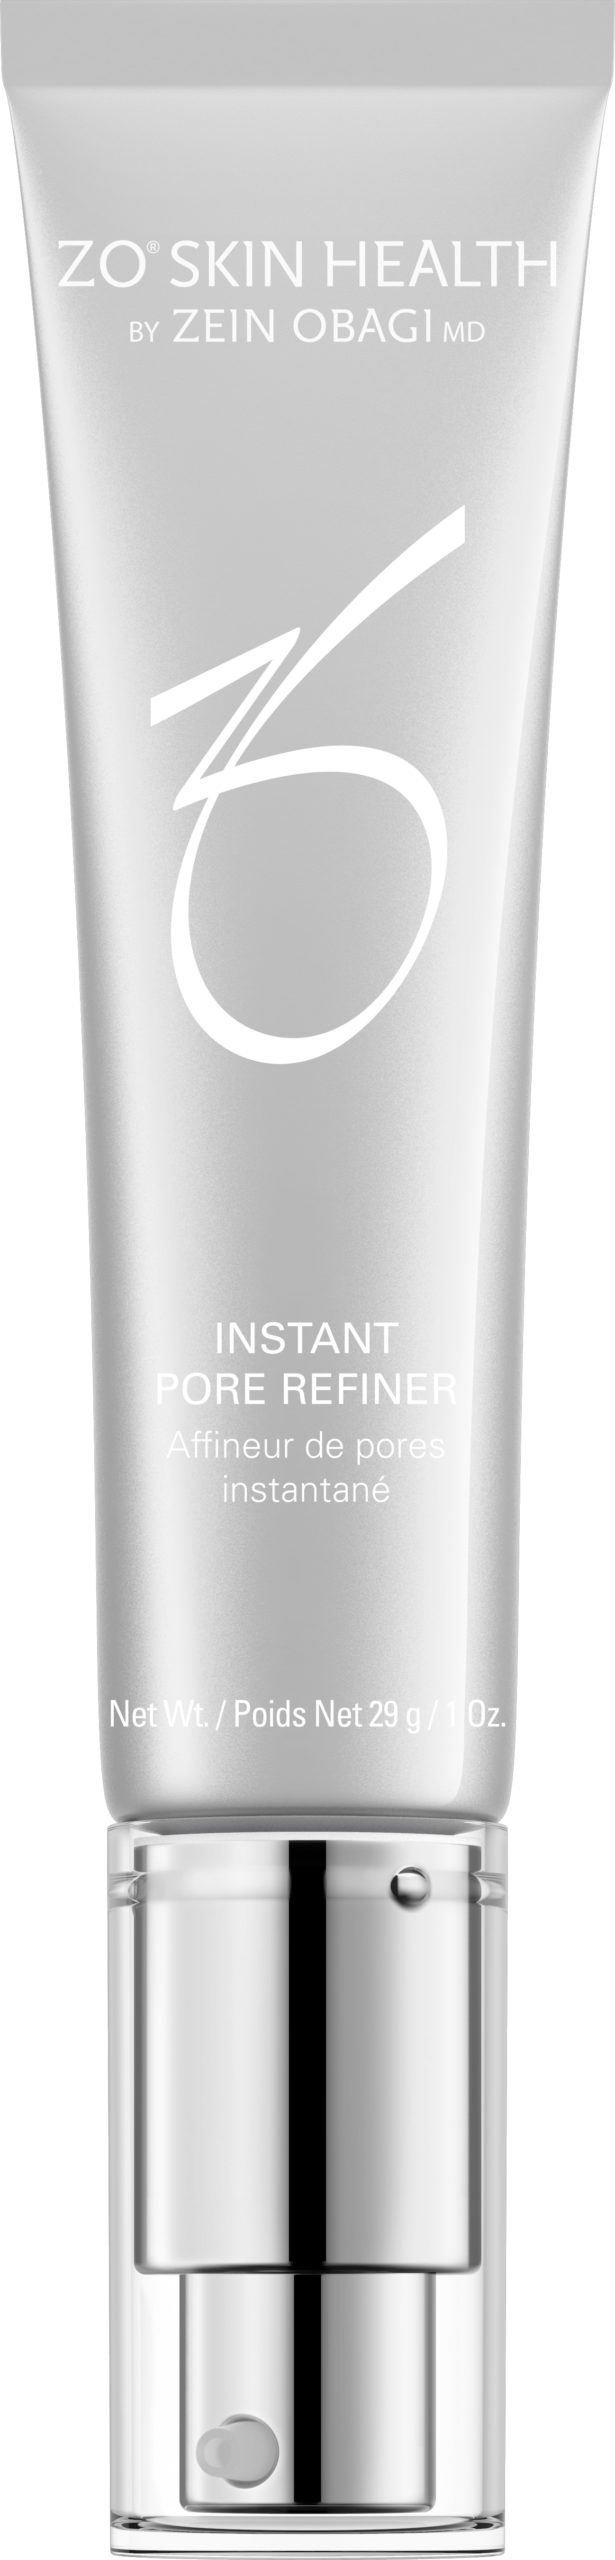 zo skin health instant pore refiner